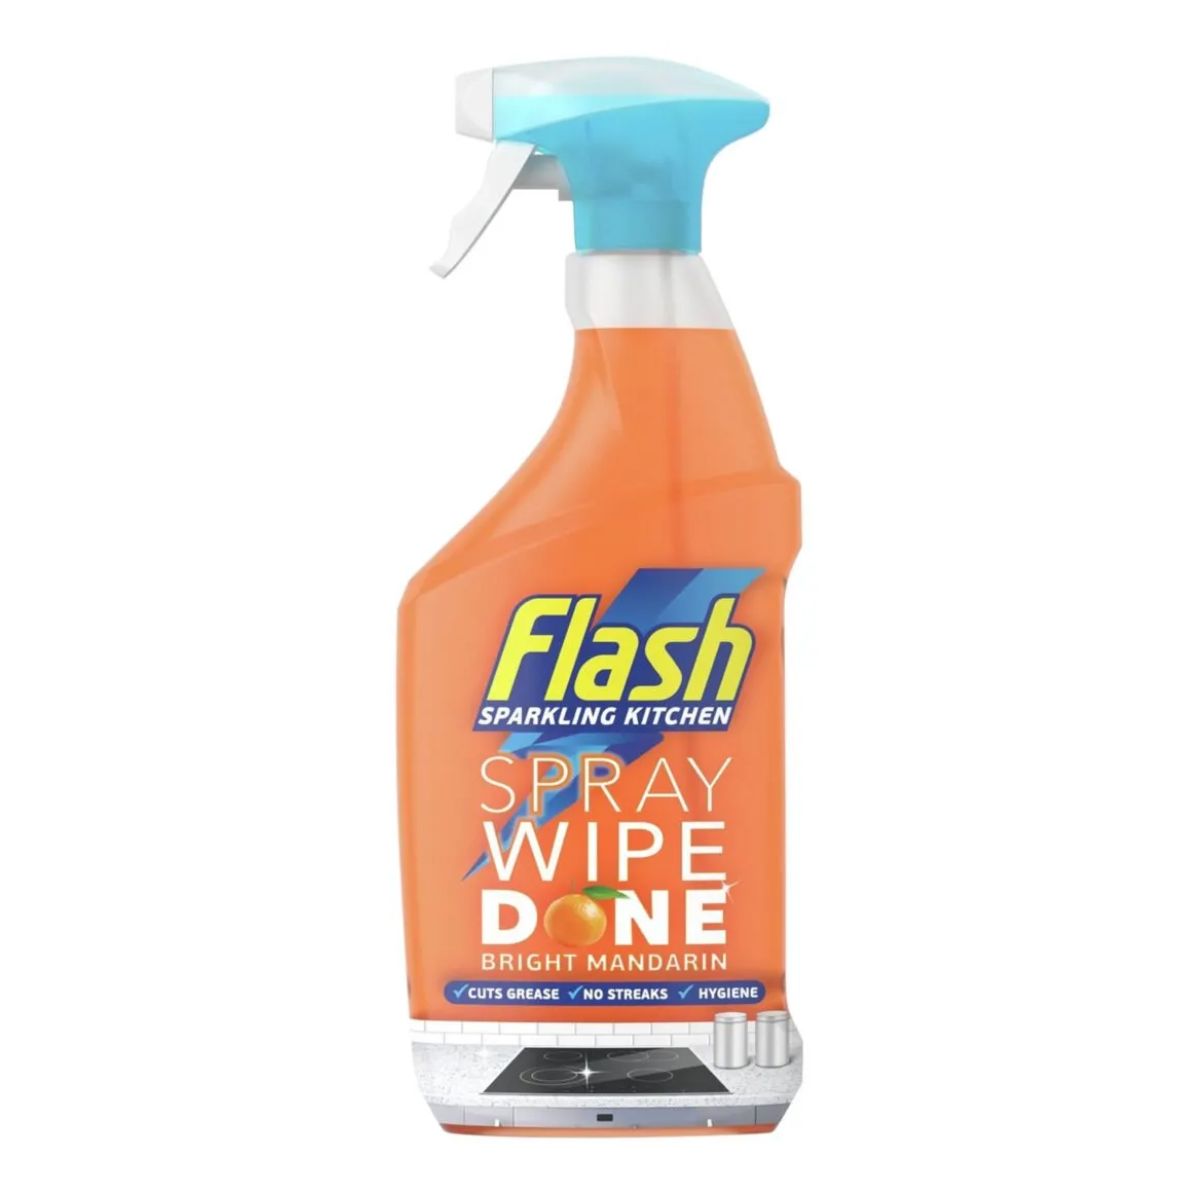 A bottle of Flash - Kitcen Spray Wipe Done Bright Mandarin - 800ml on a white background.